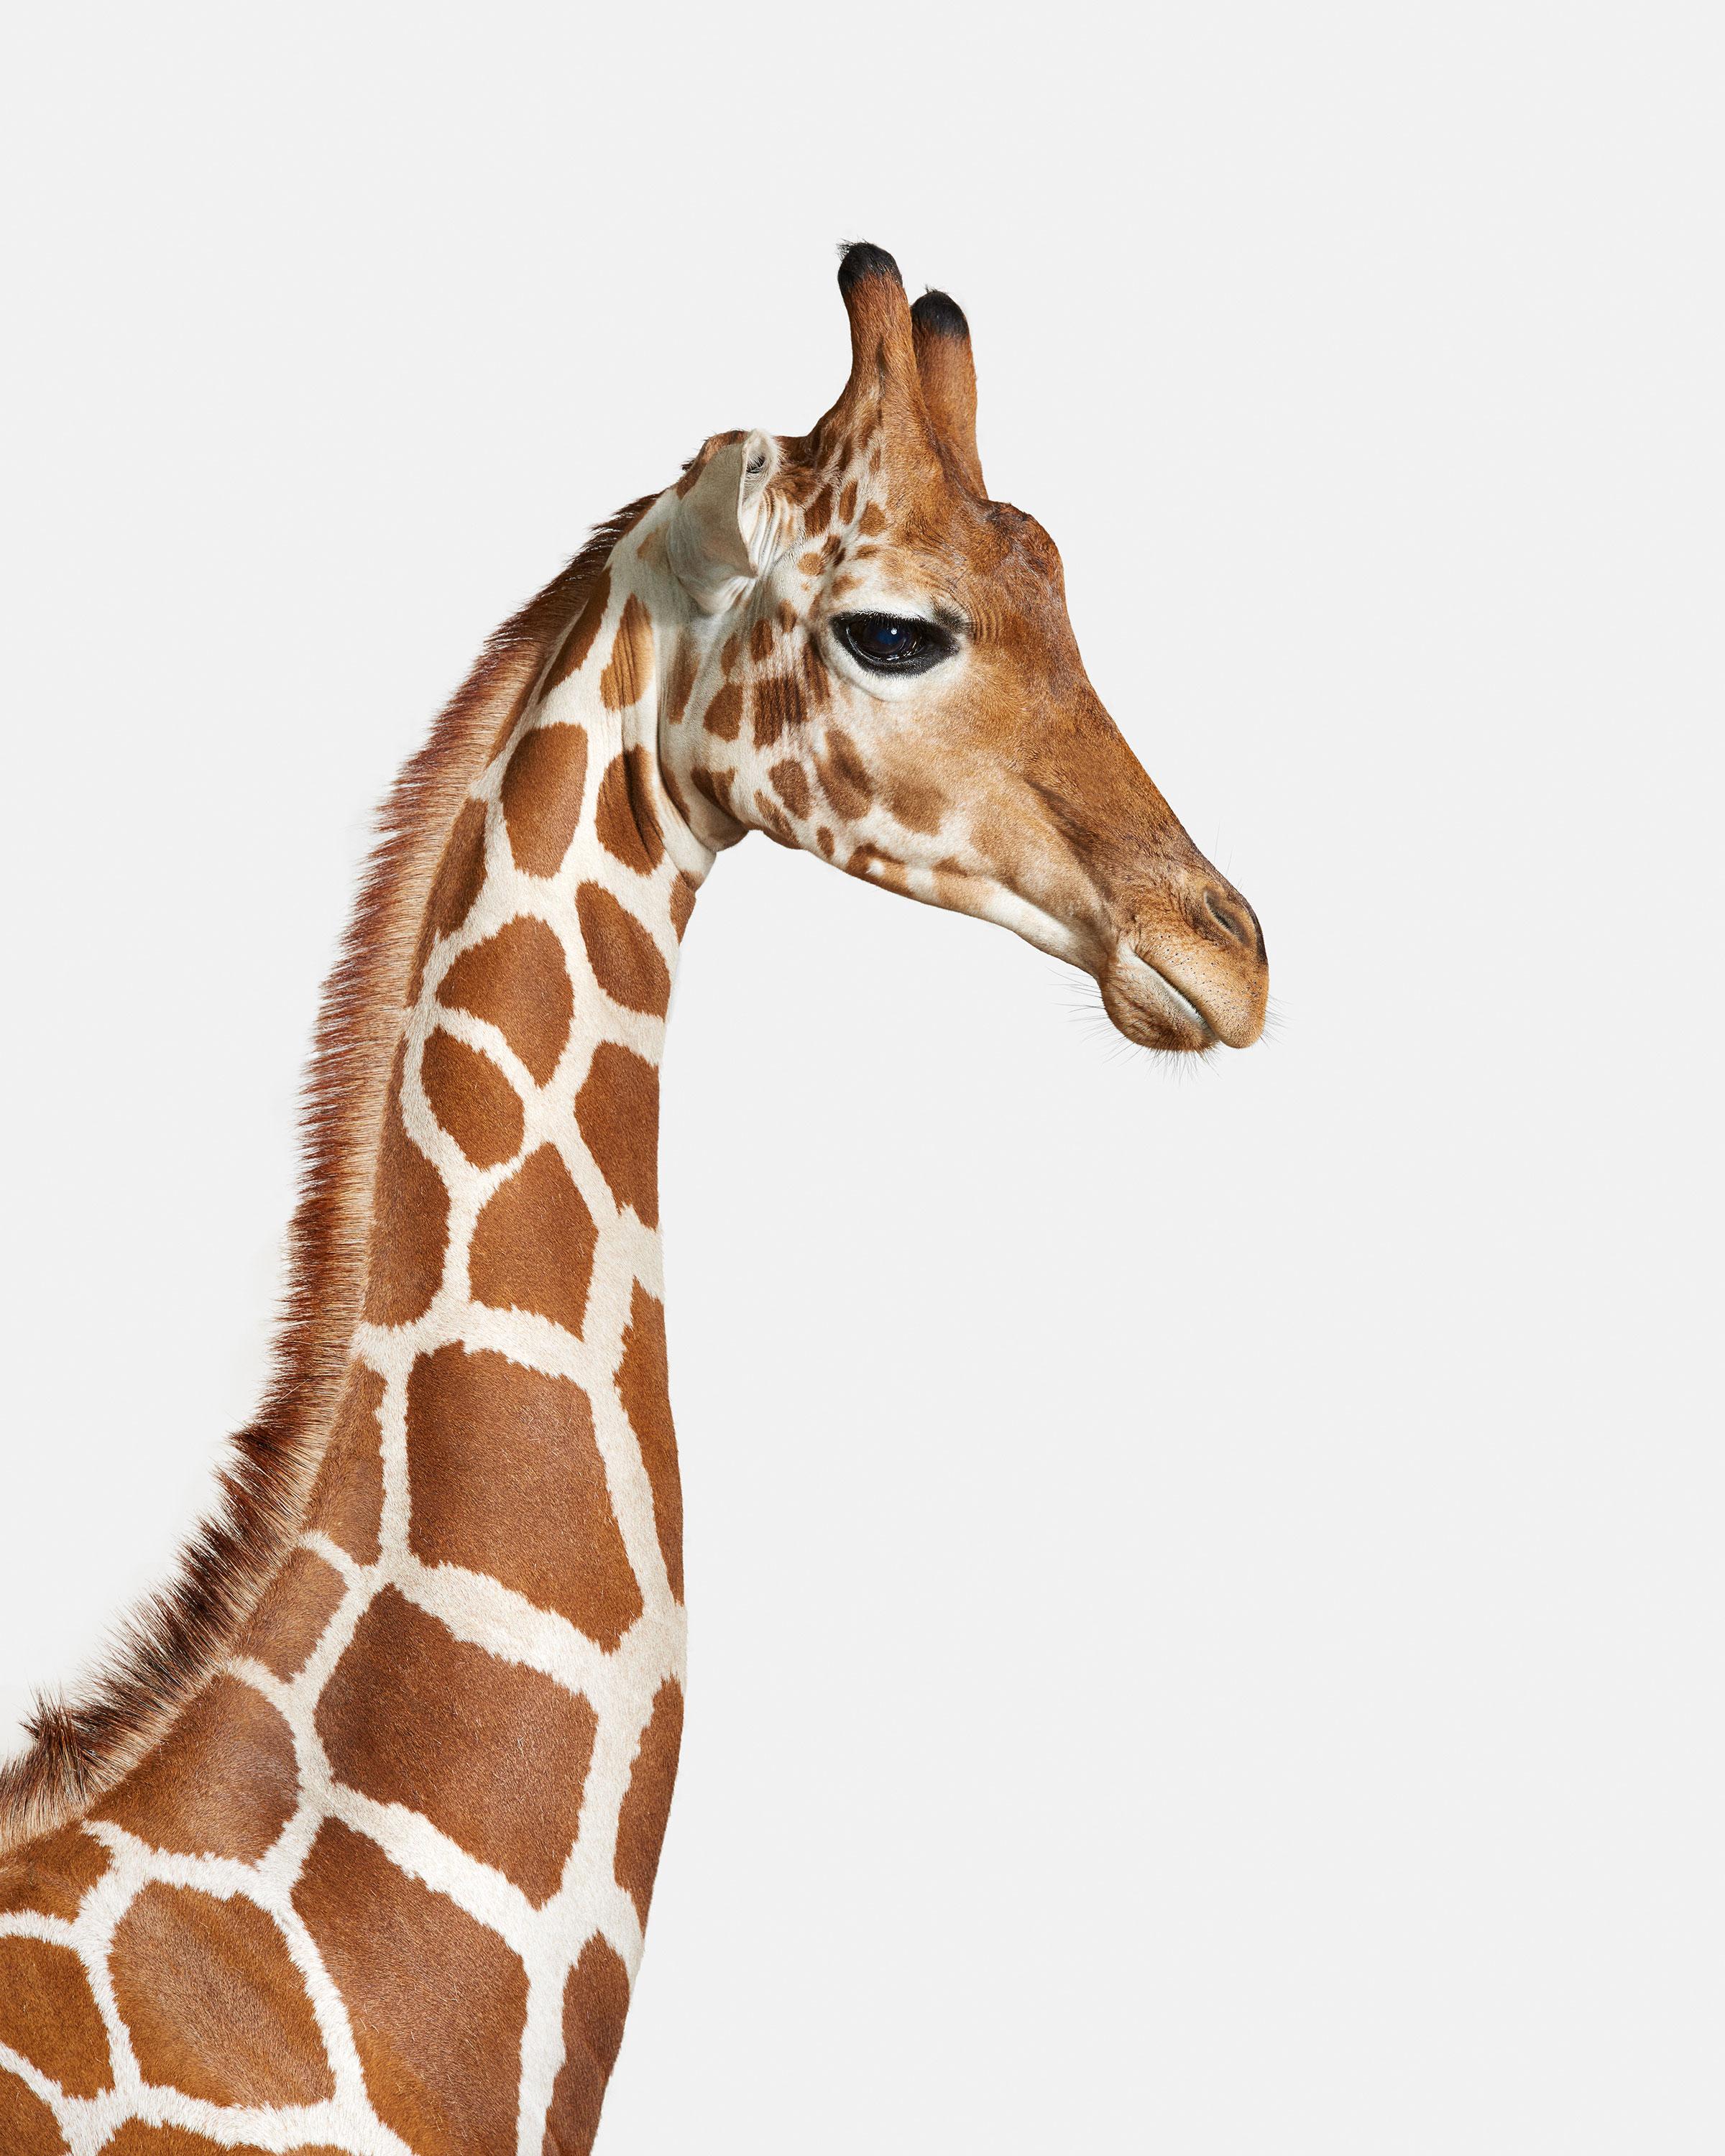 Randal Ford Color Photograph - Giraffe No. 1 (60" x 48")